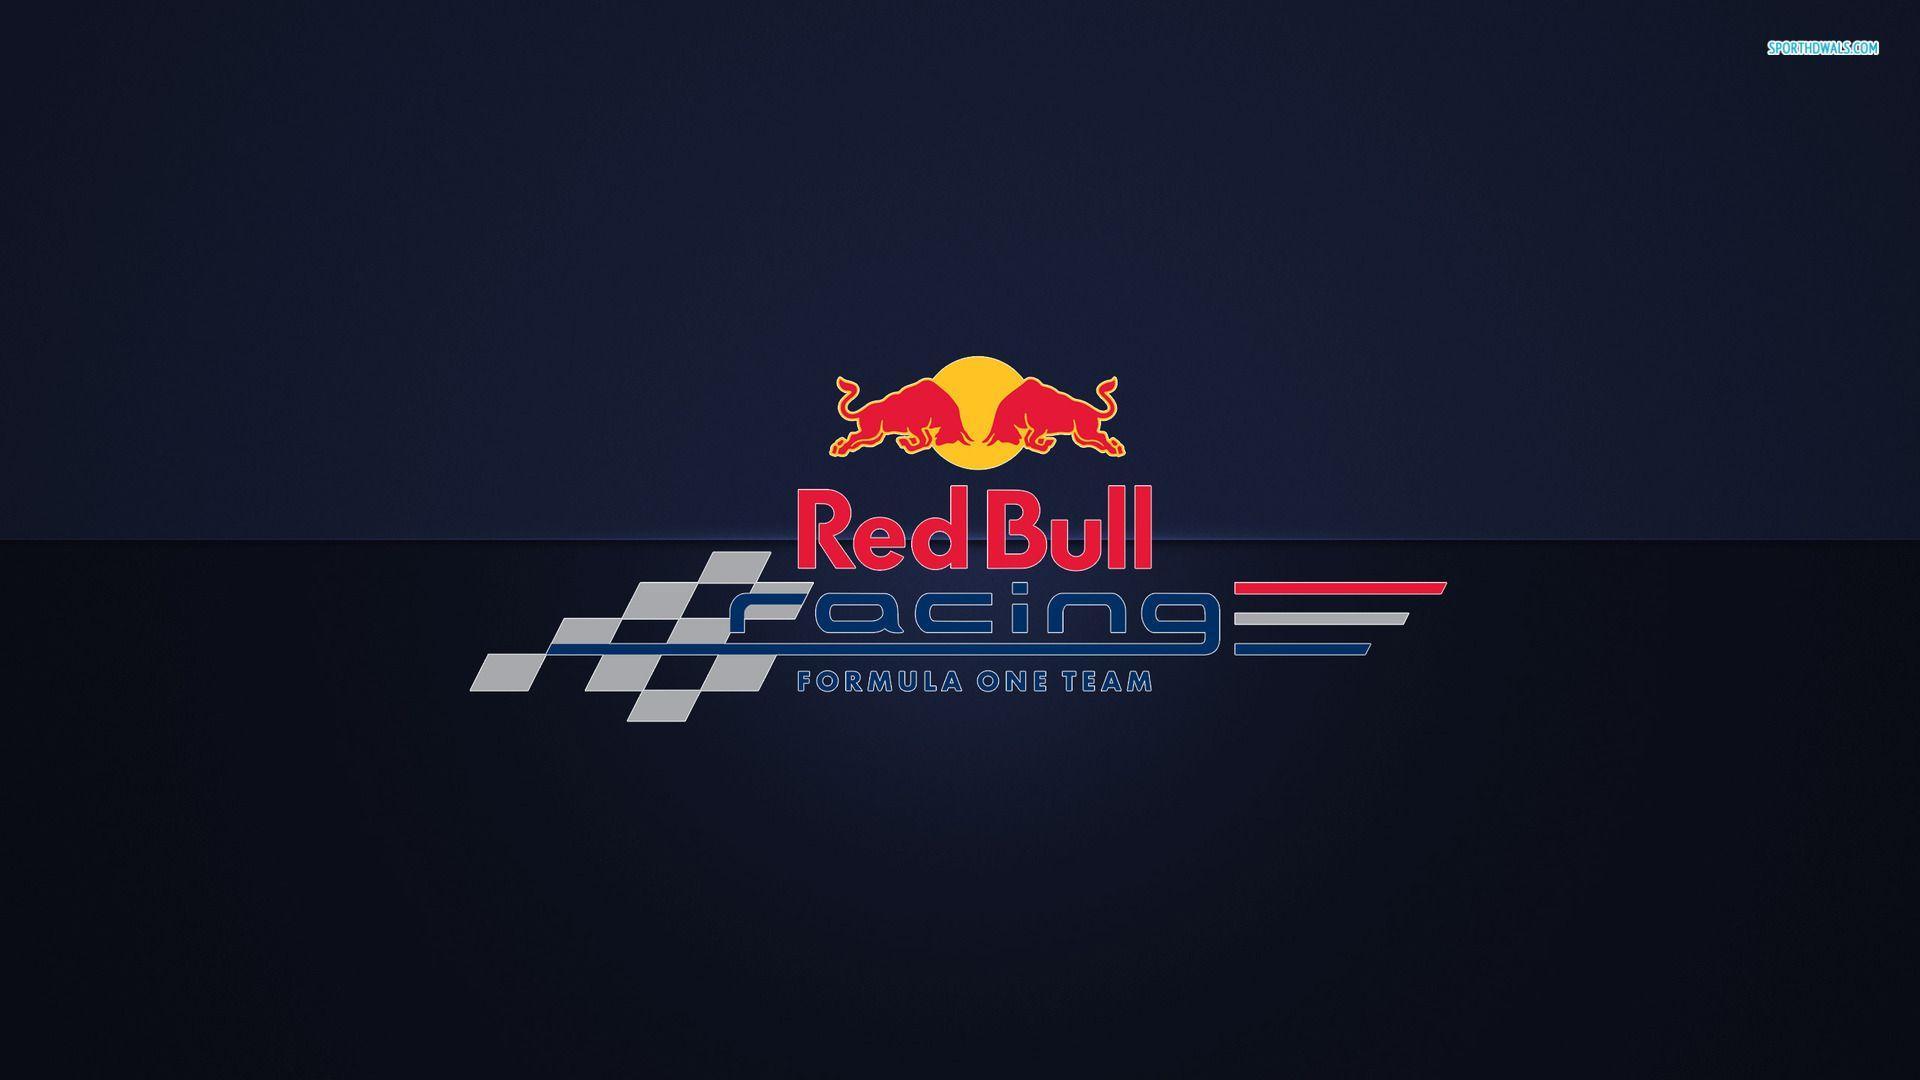 Red Bull Racing Wallpapers Hd